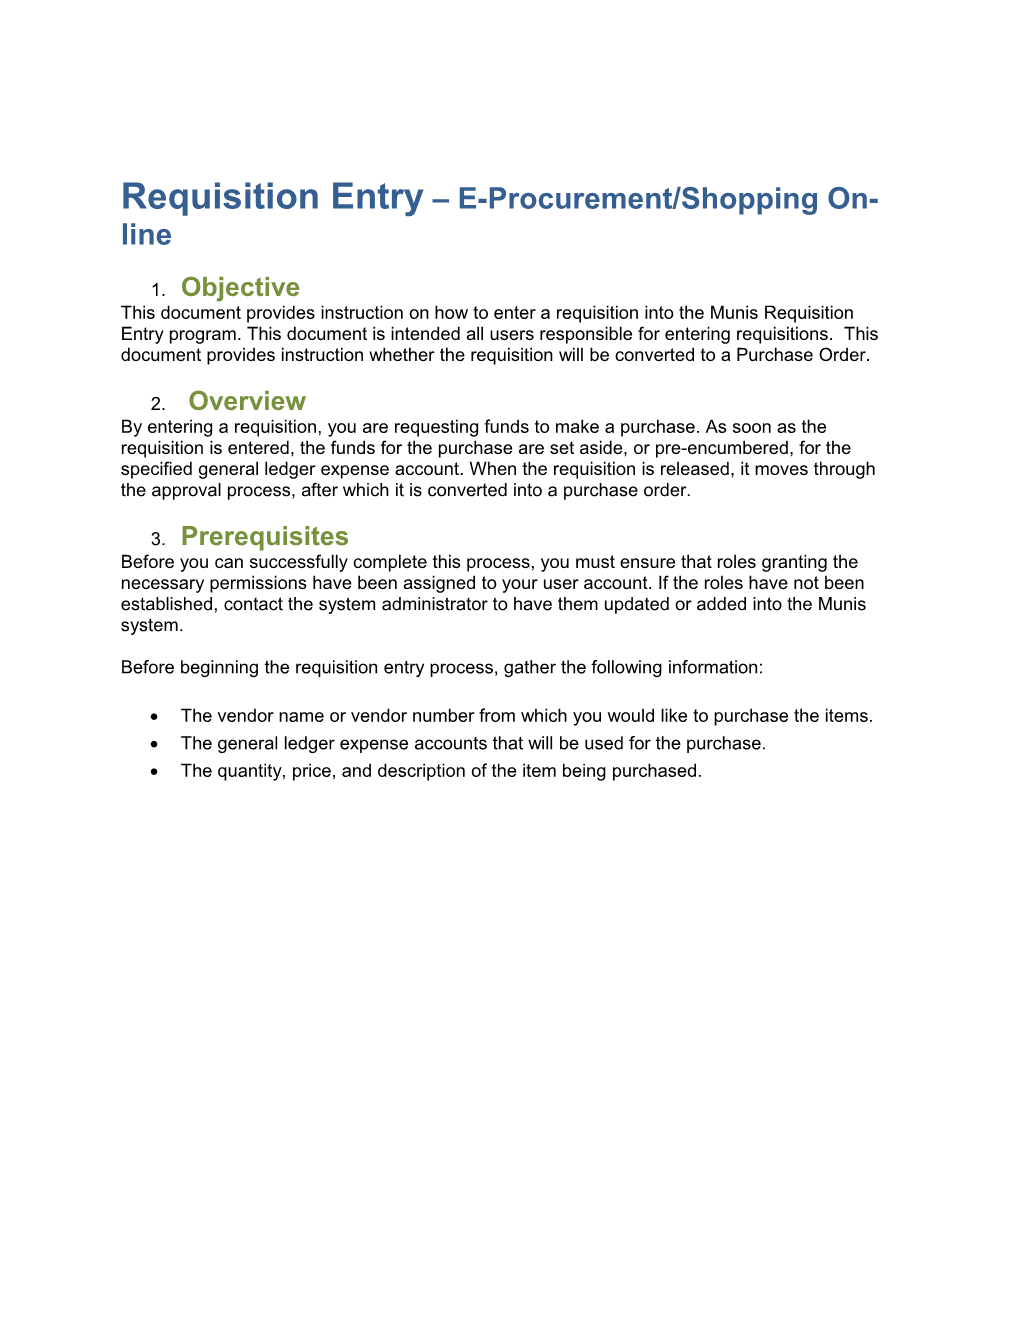 Requisition Entry E-Procurement/Shopping On-Line